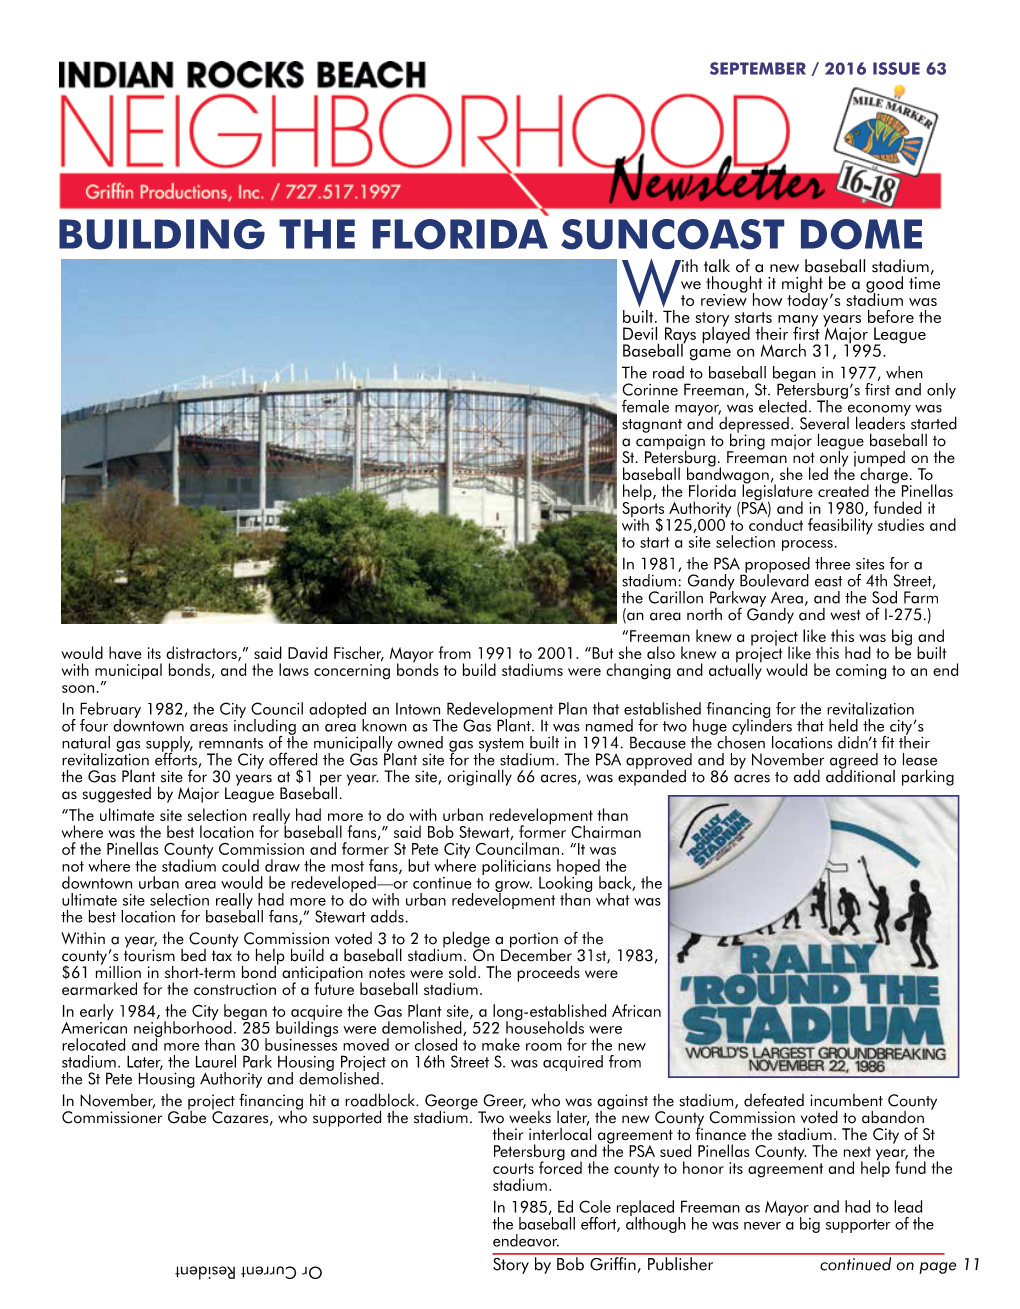 Building the Florida Suncoast Dome